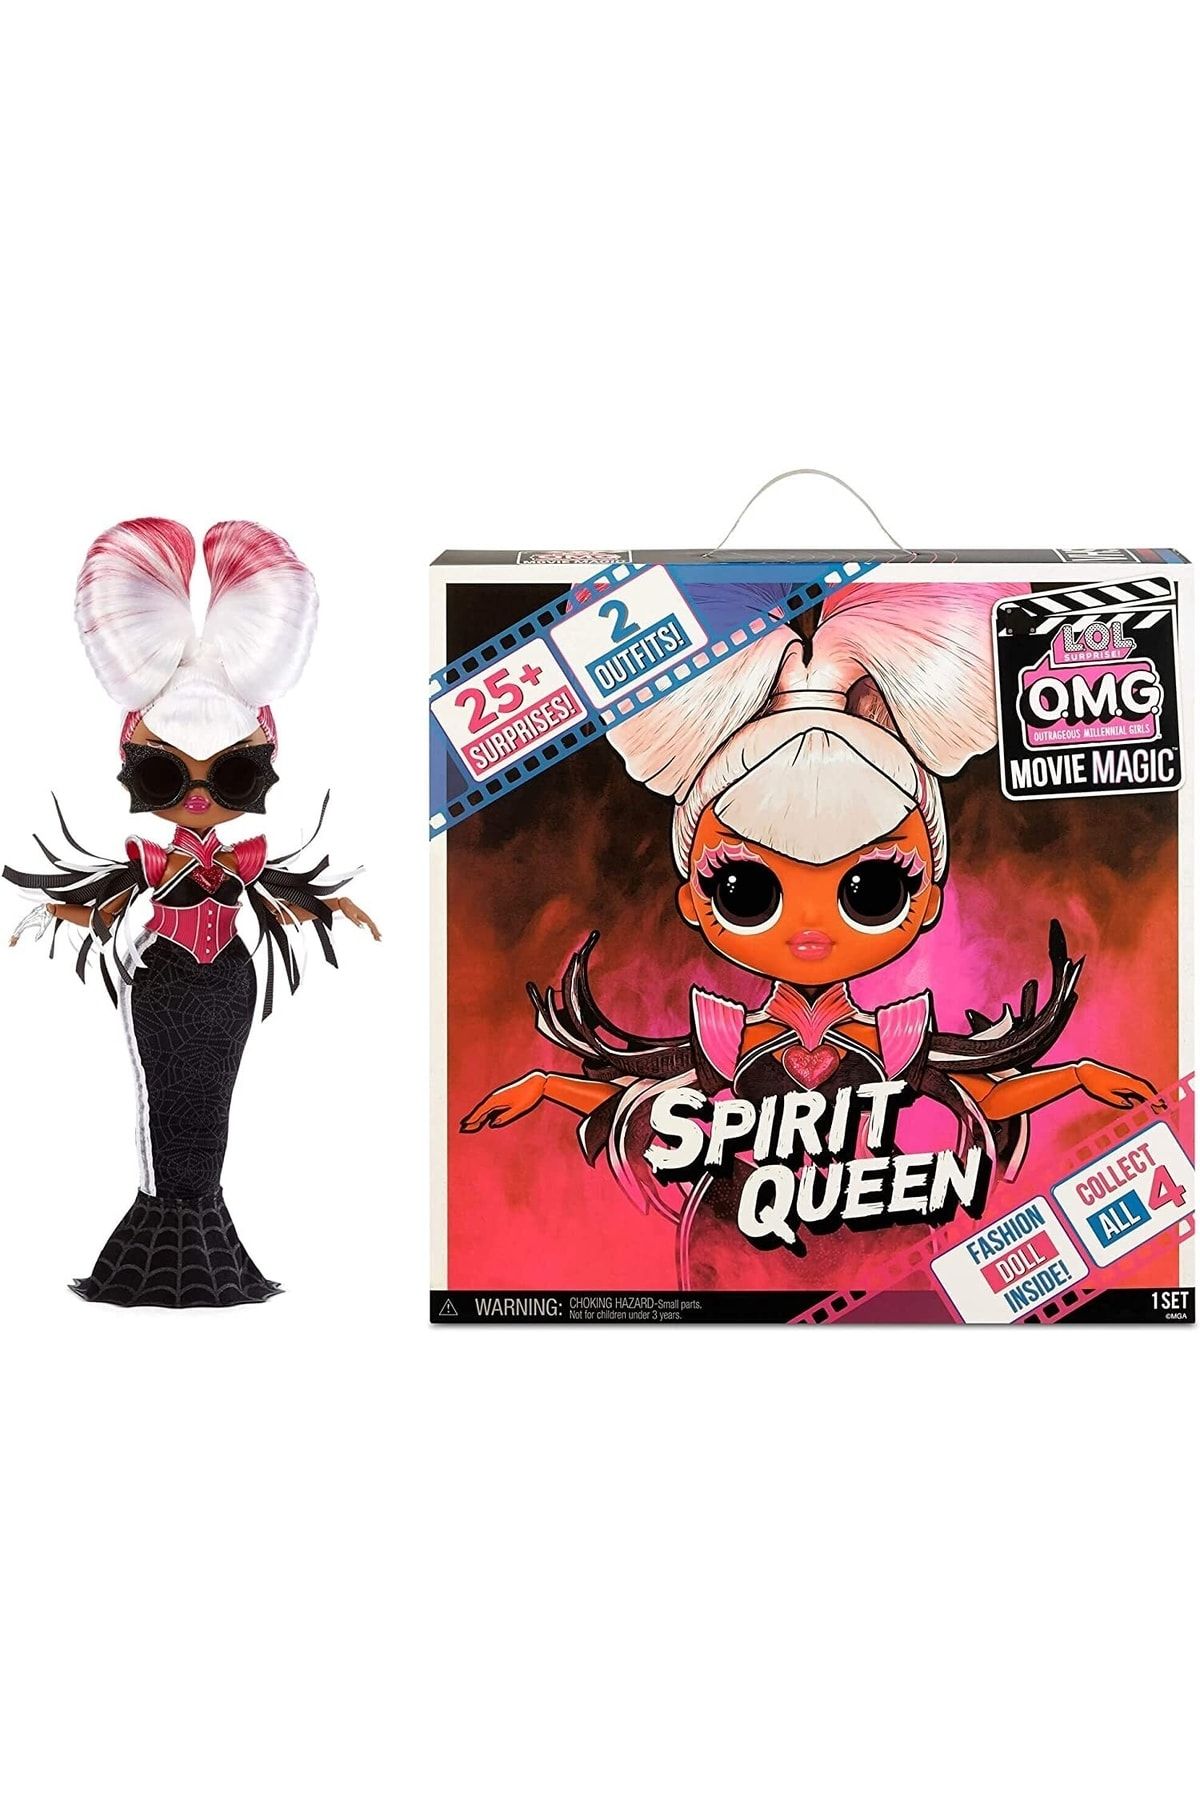 Lol Surprise Omg Movie Magic Spirit Queen - (1 Adet Bebek Içerir) 25 Sürpriz